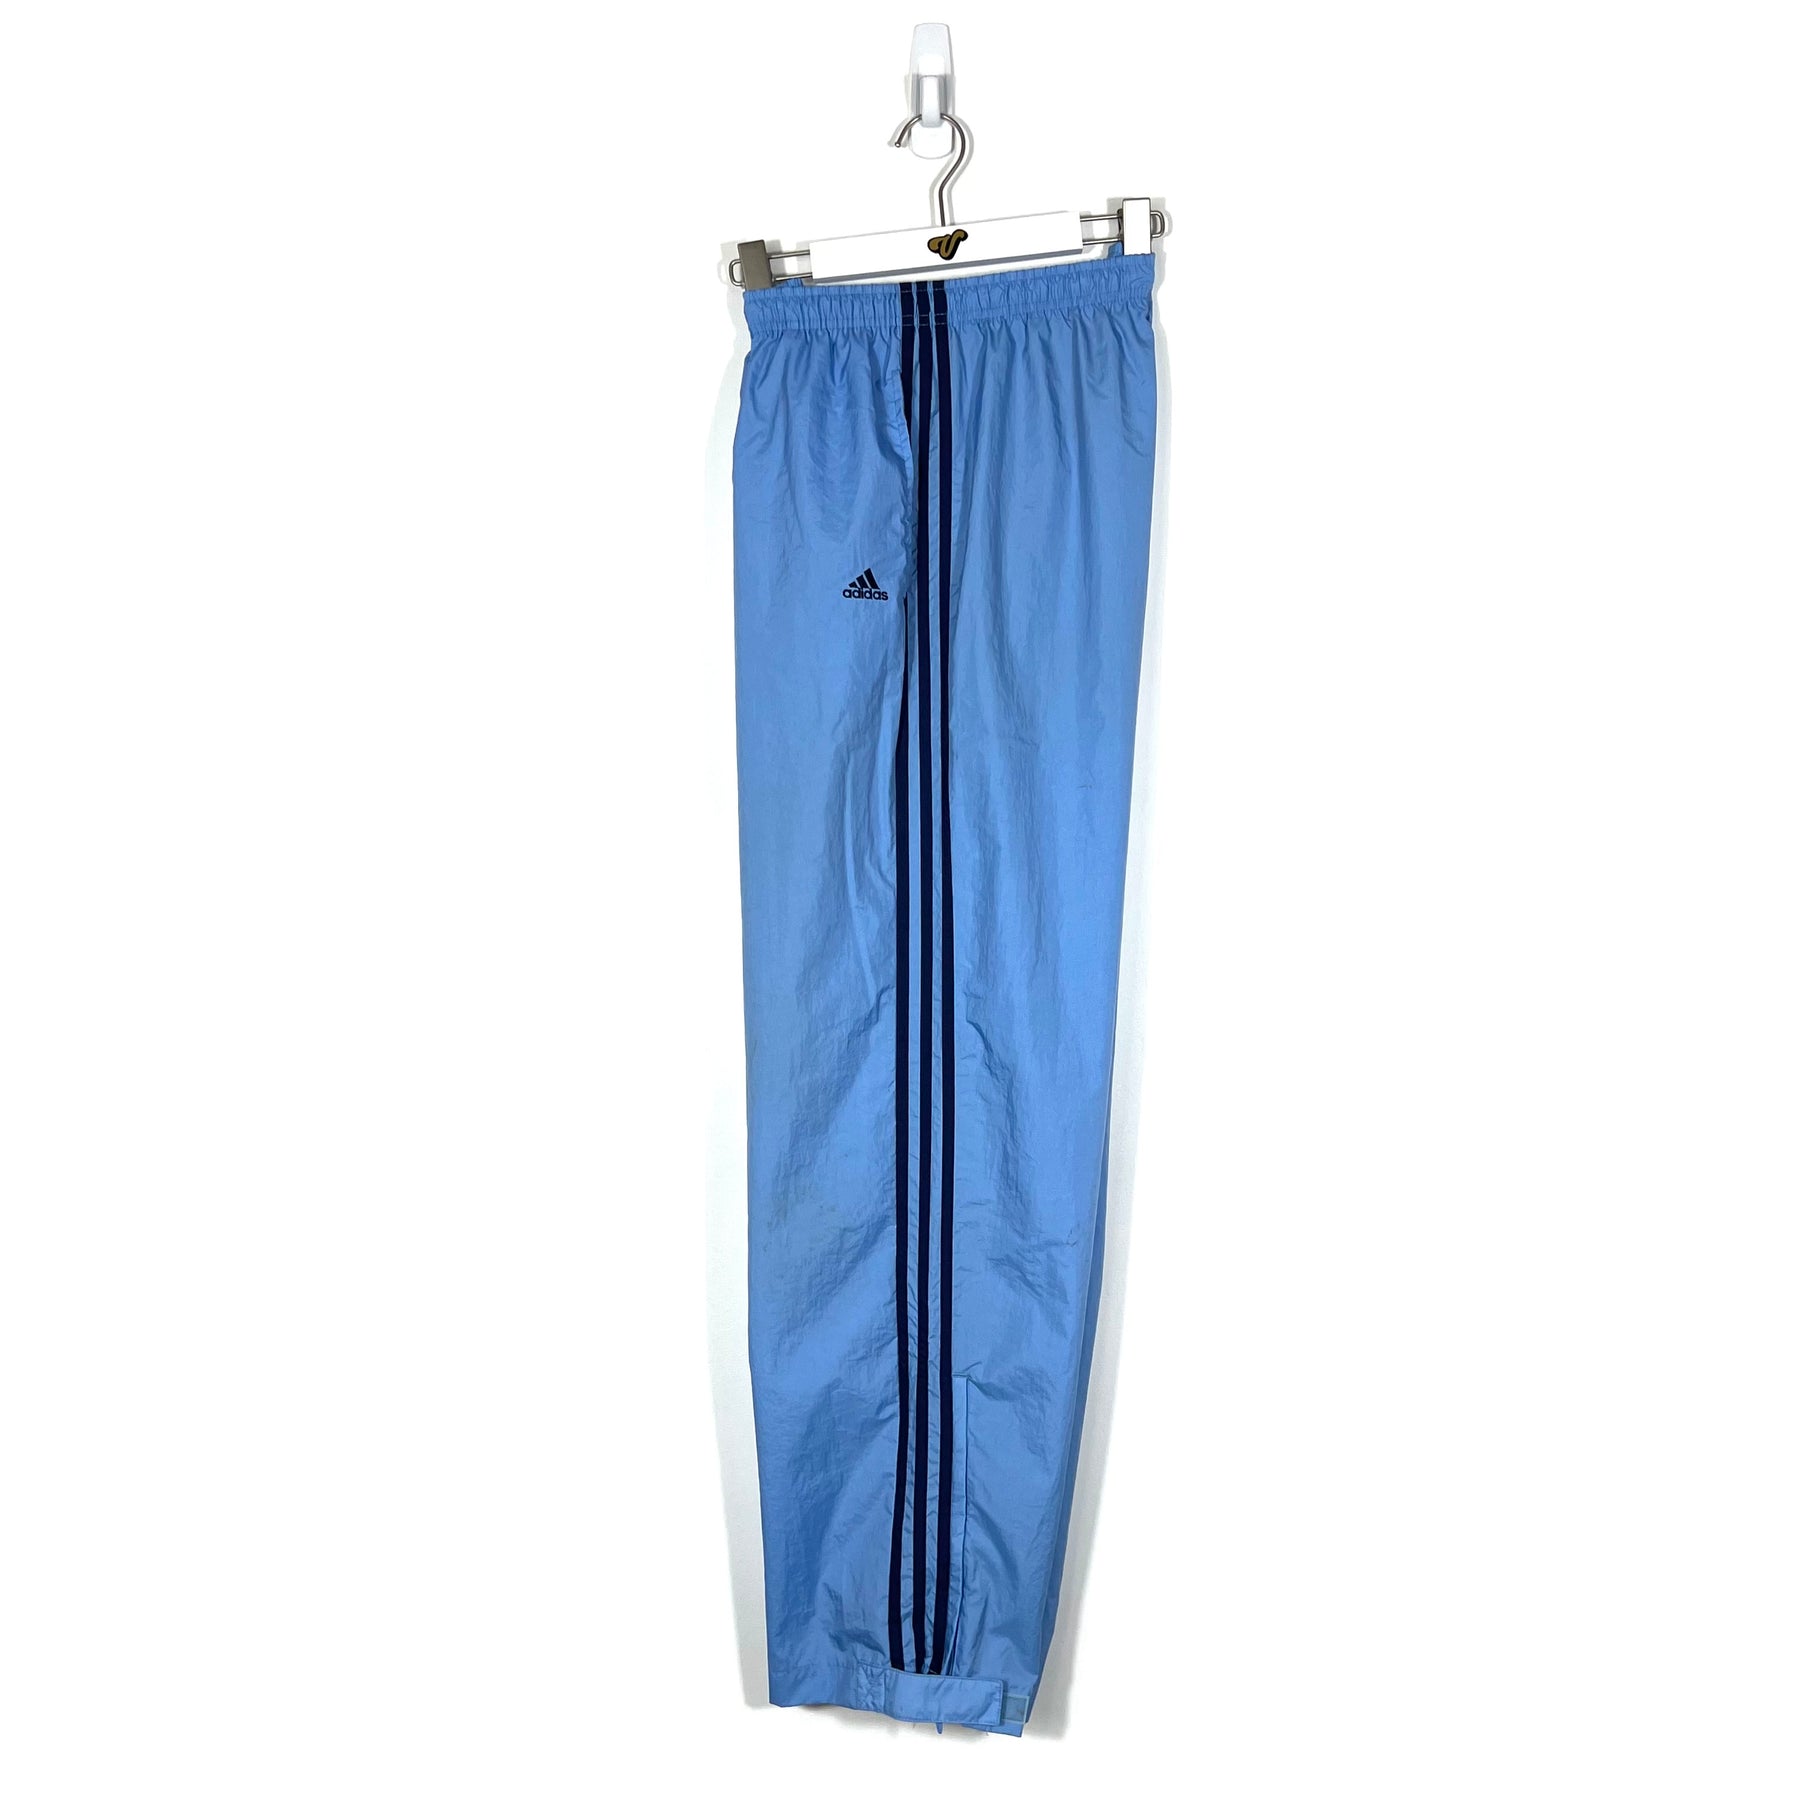 Vintage Adidas Wind Track Pants - Women's Large